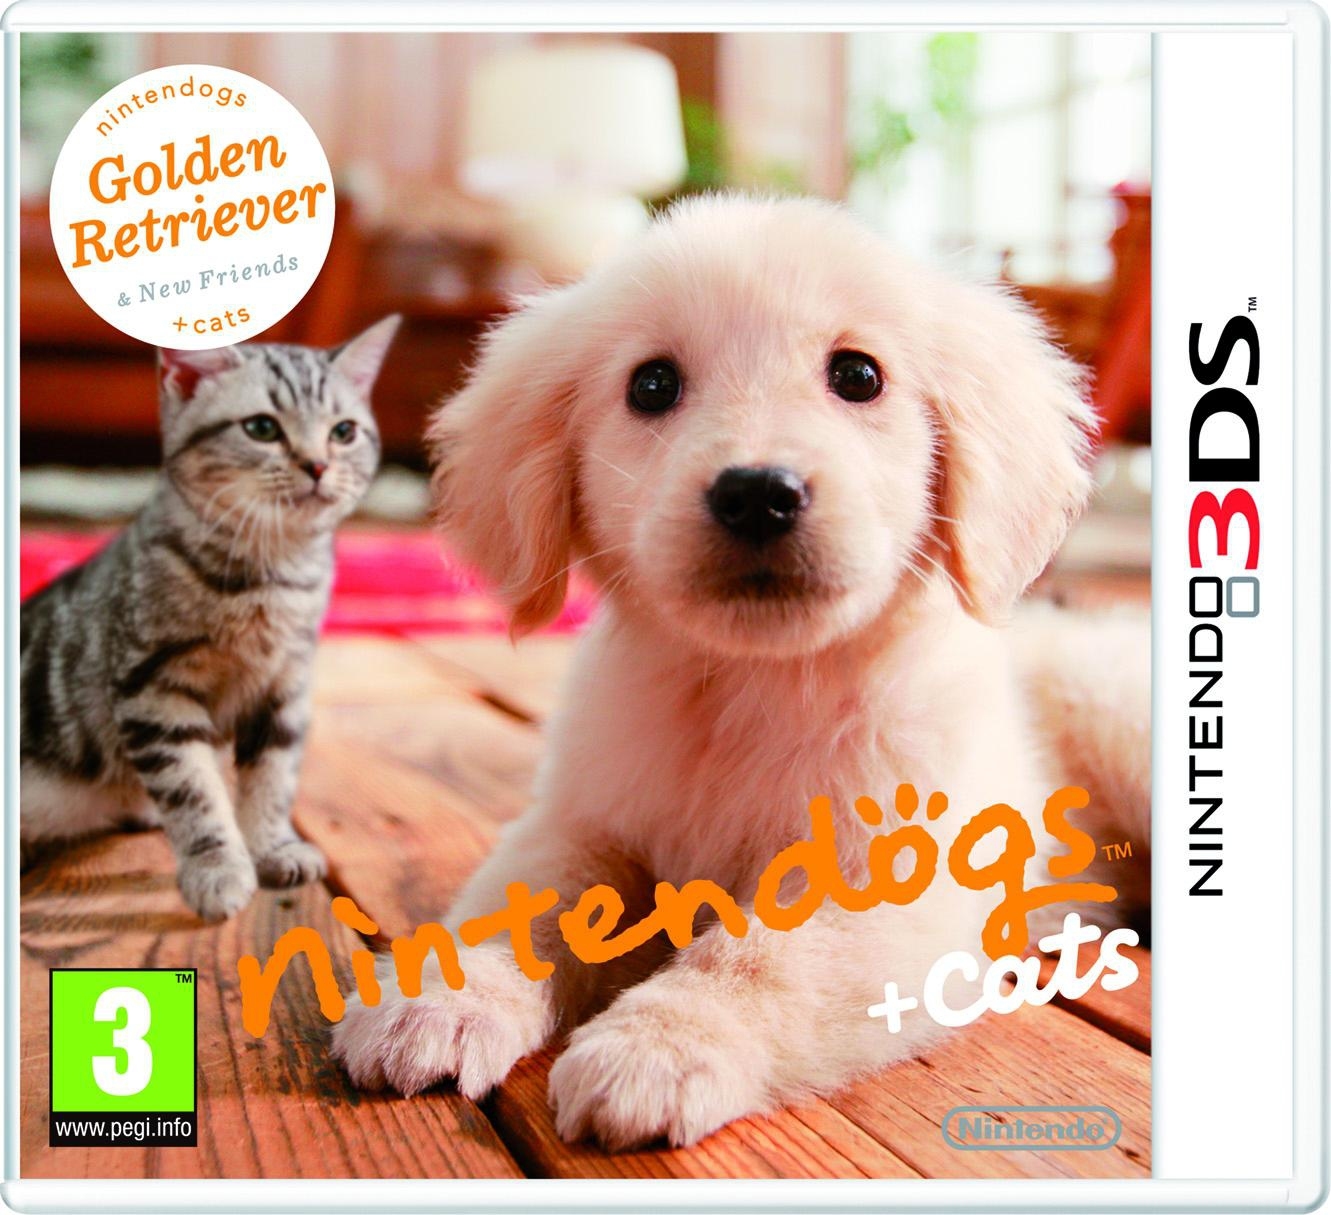 Nintendo gs + cats: Golden Retriever & New Friends Nintendo 3DS